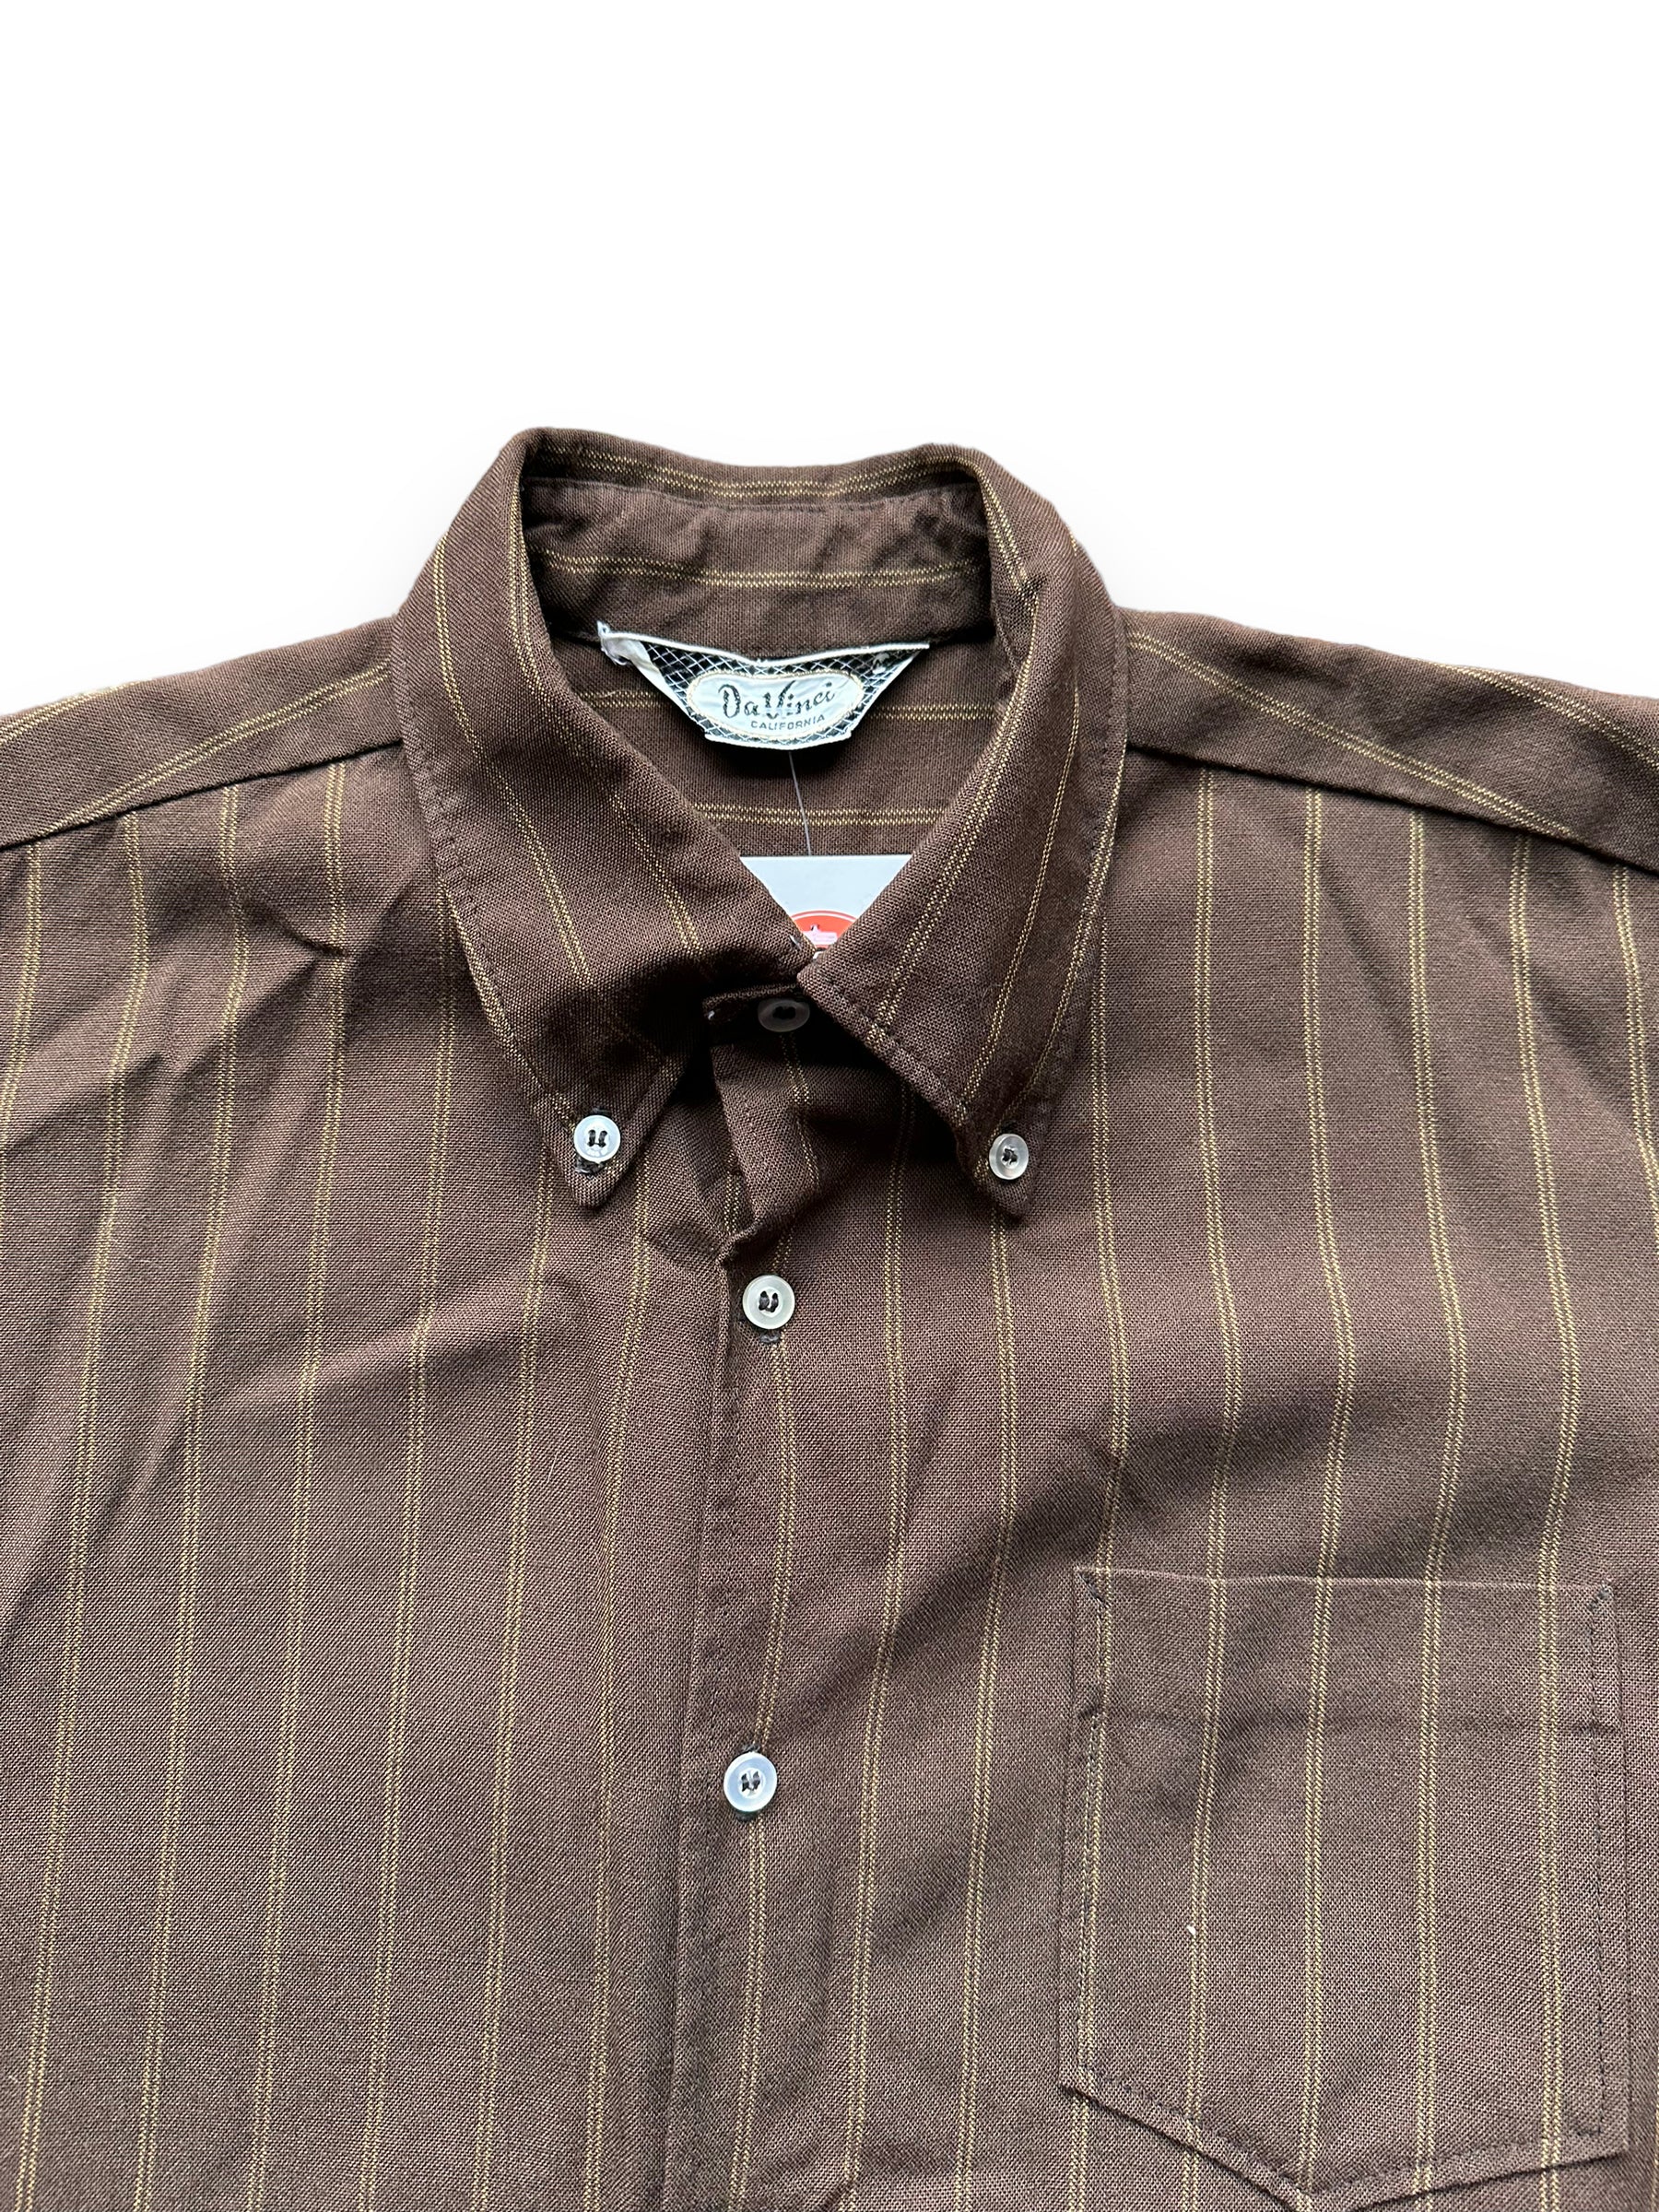 Upper Front View of Vintage Davinci Brown Stripe Short Sleeve Button Up Shirt SZ M | Vintage Button Up Shirt Seattle | Barn Owl Vintage Seattle